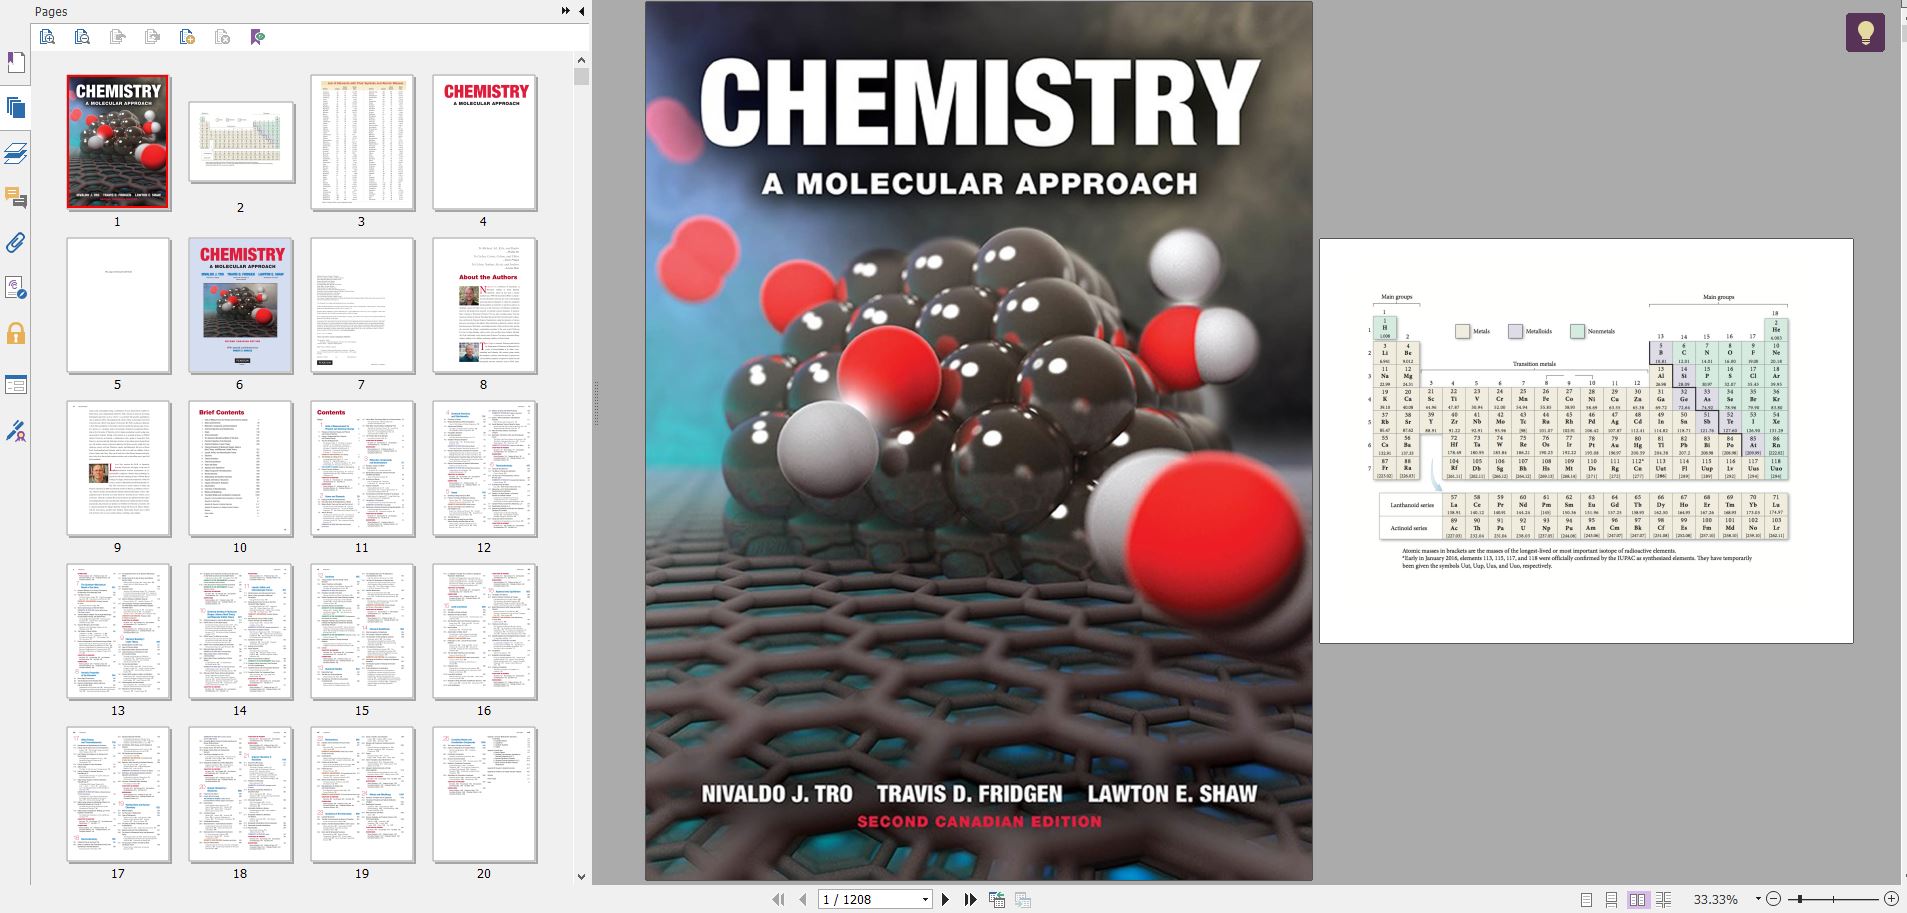 دانلود کتاب Chemistry: A Molecular Approach, Second Canadian Edition ISBN-10: 013458631X ISBN-13: 9780134586311 2017 خرید ایبوک شیمی نگرش مولکولی Nivaldo J. Tro , Travis D. Fridgen گیگاپیپر